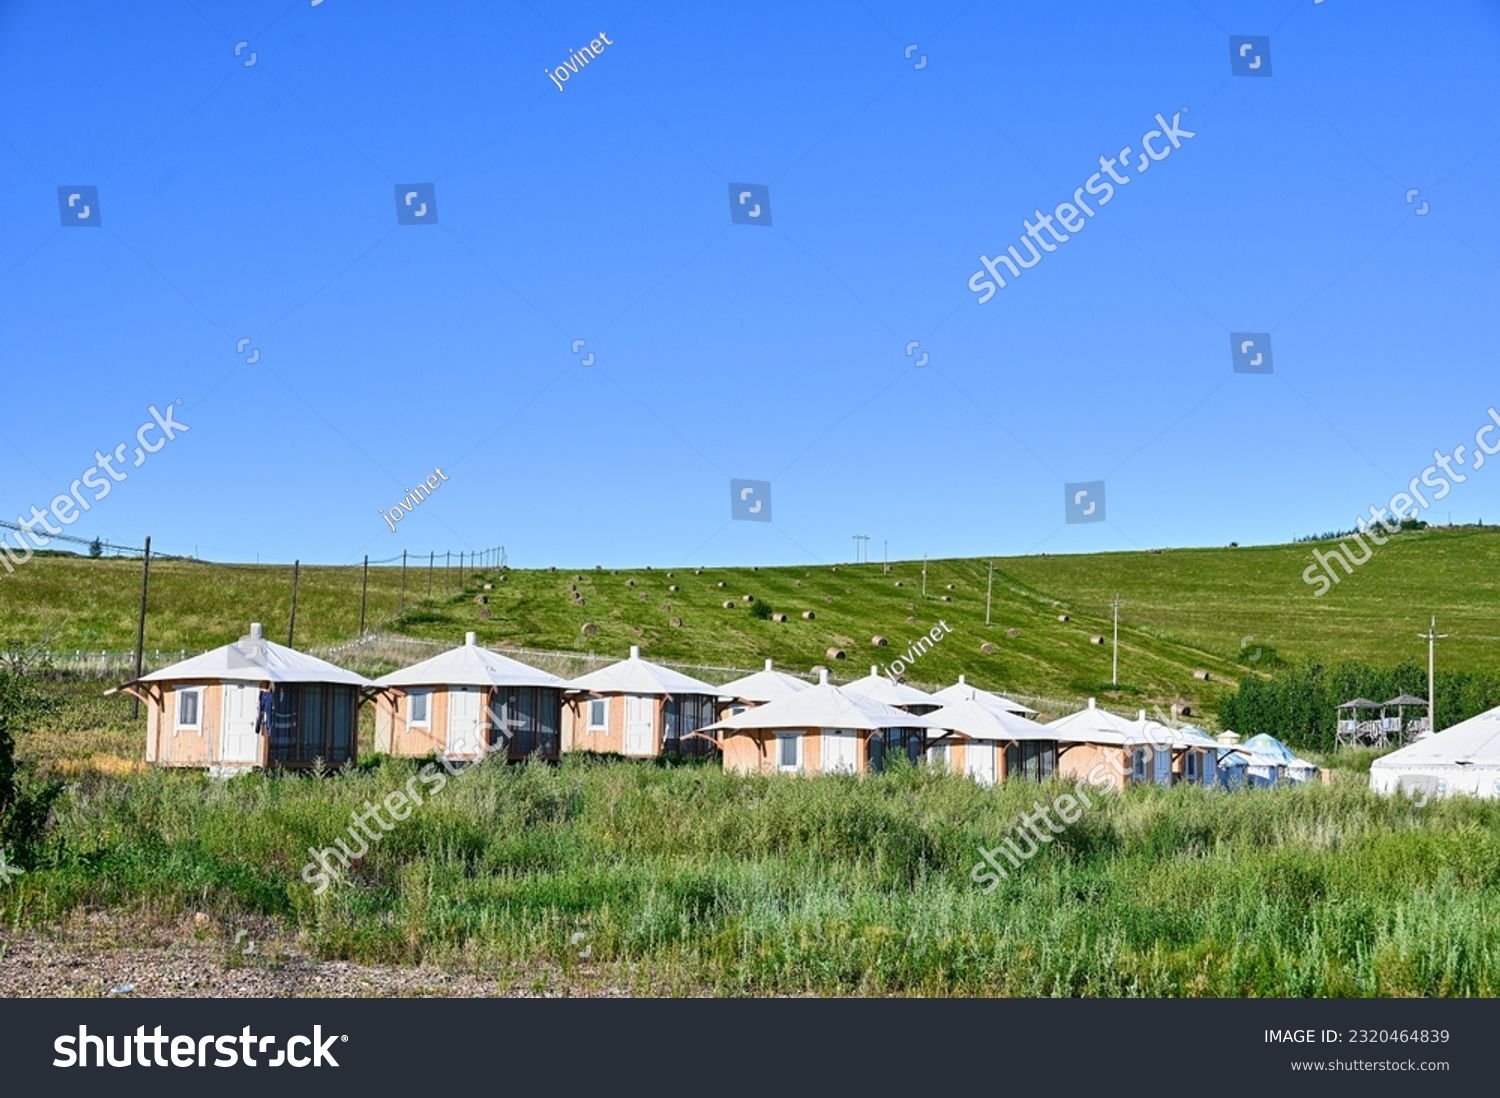 Hulunbeier grassland in Inner Mongolia, bivouac area,campsite trips #2320464839